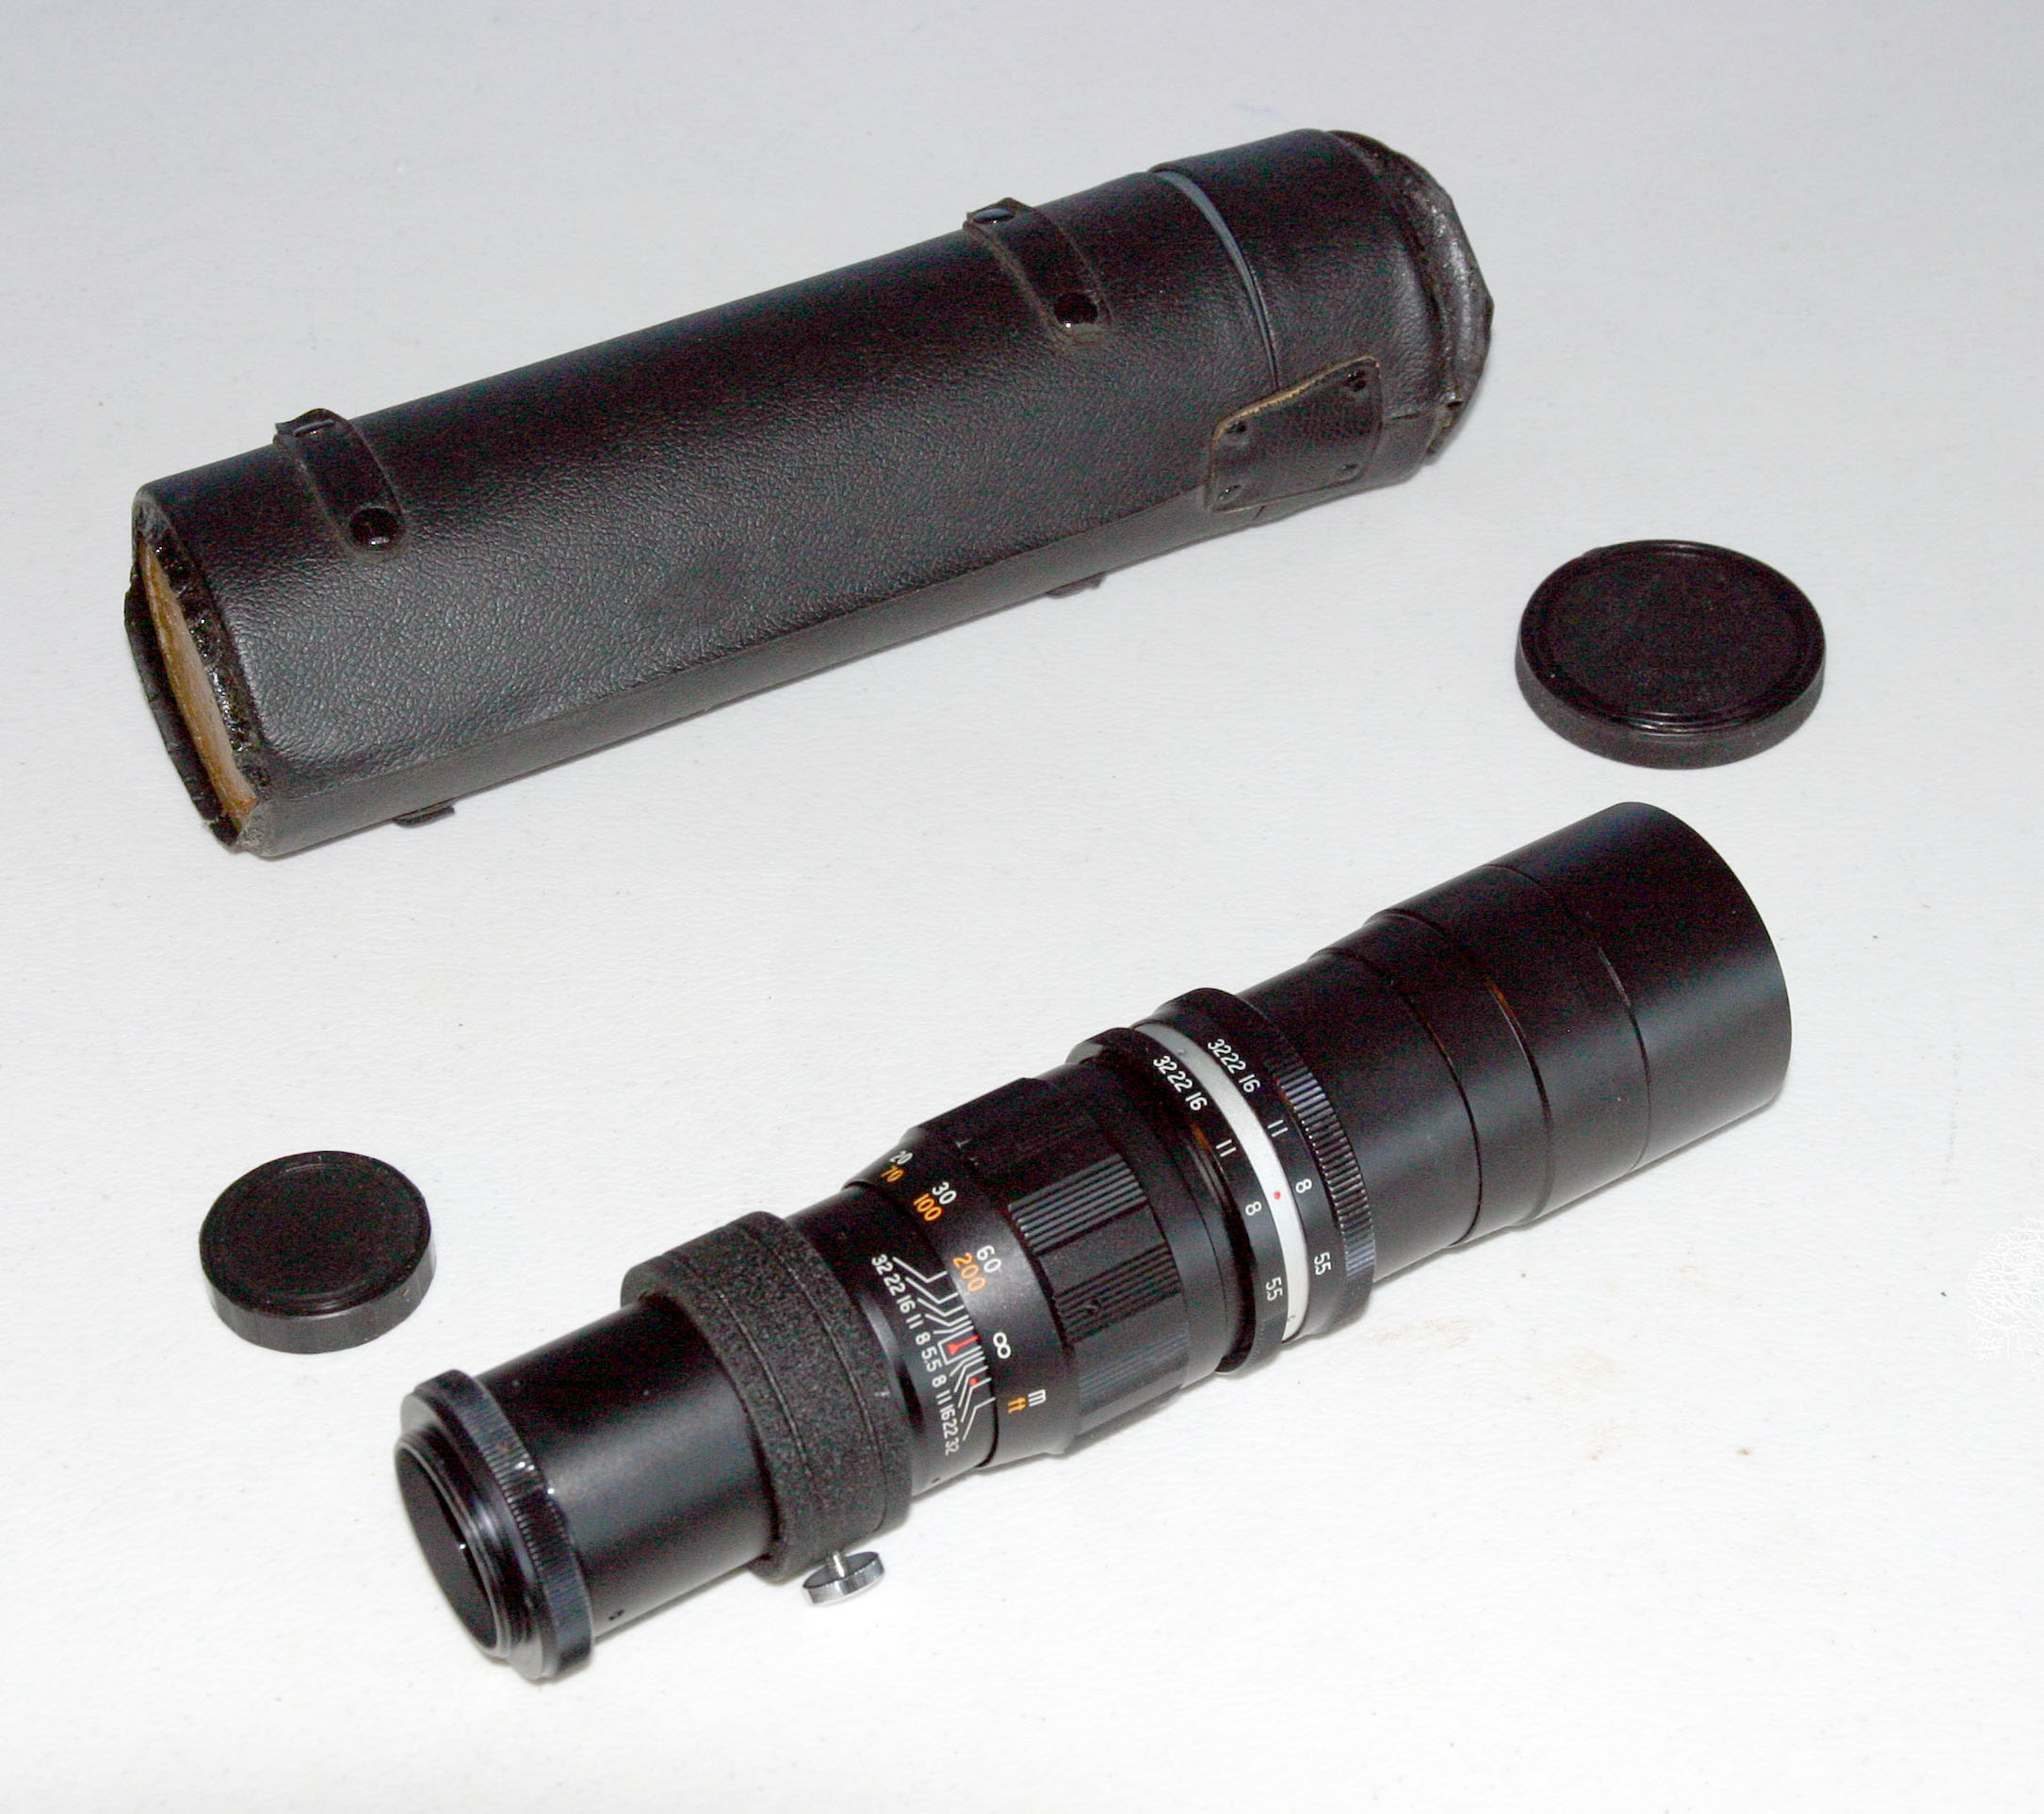 Cosmicar 25-200mm, f5.5 Television Lens, Pentax thread.